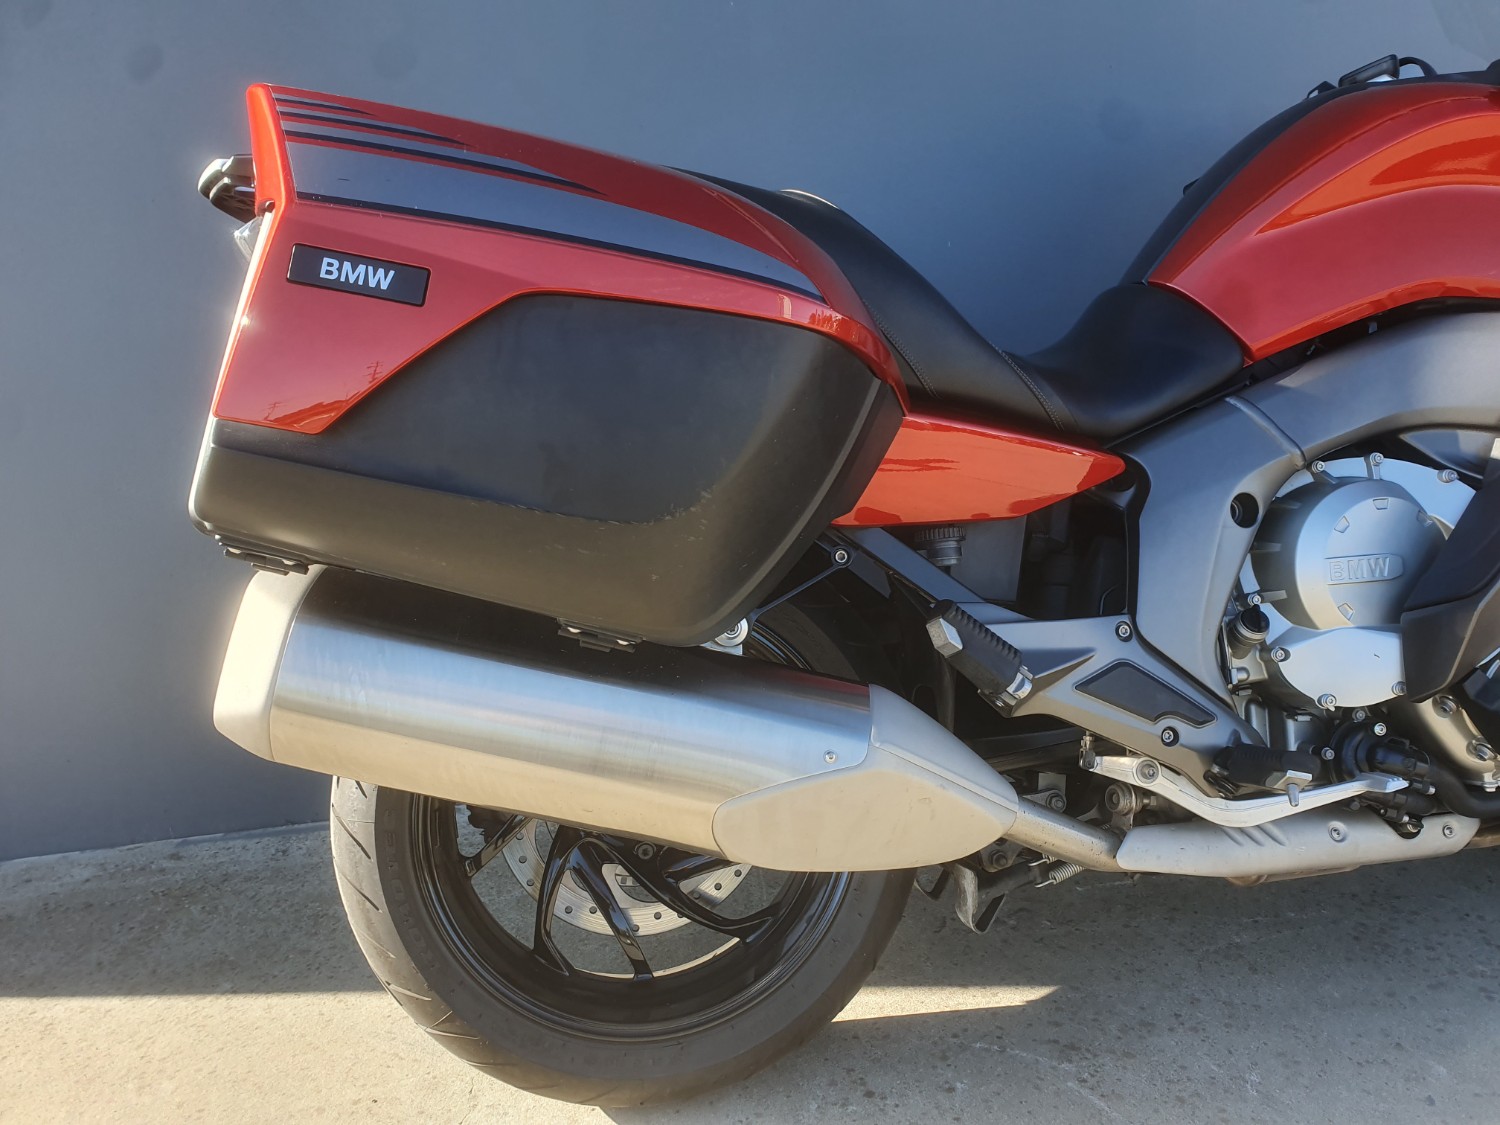 2015 BMW K 1600 GT Motorcycle Image 10